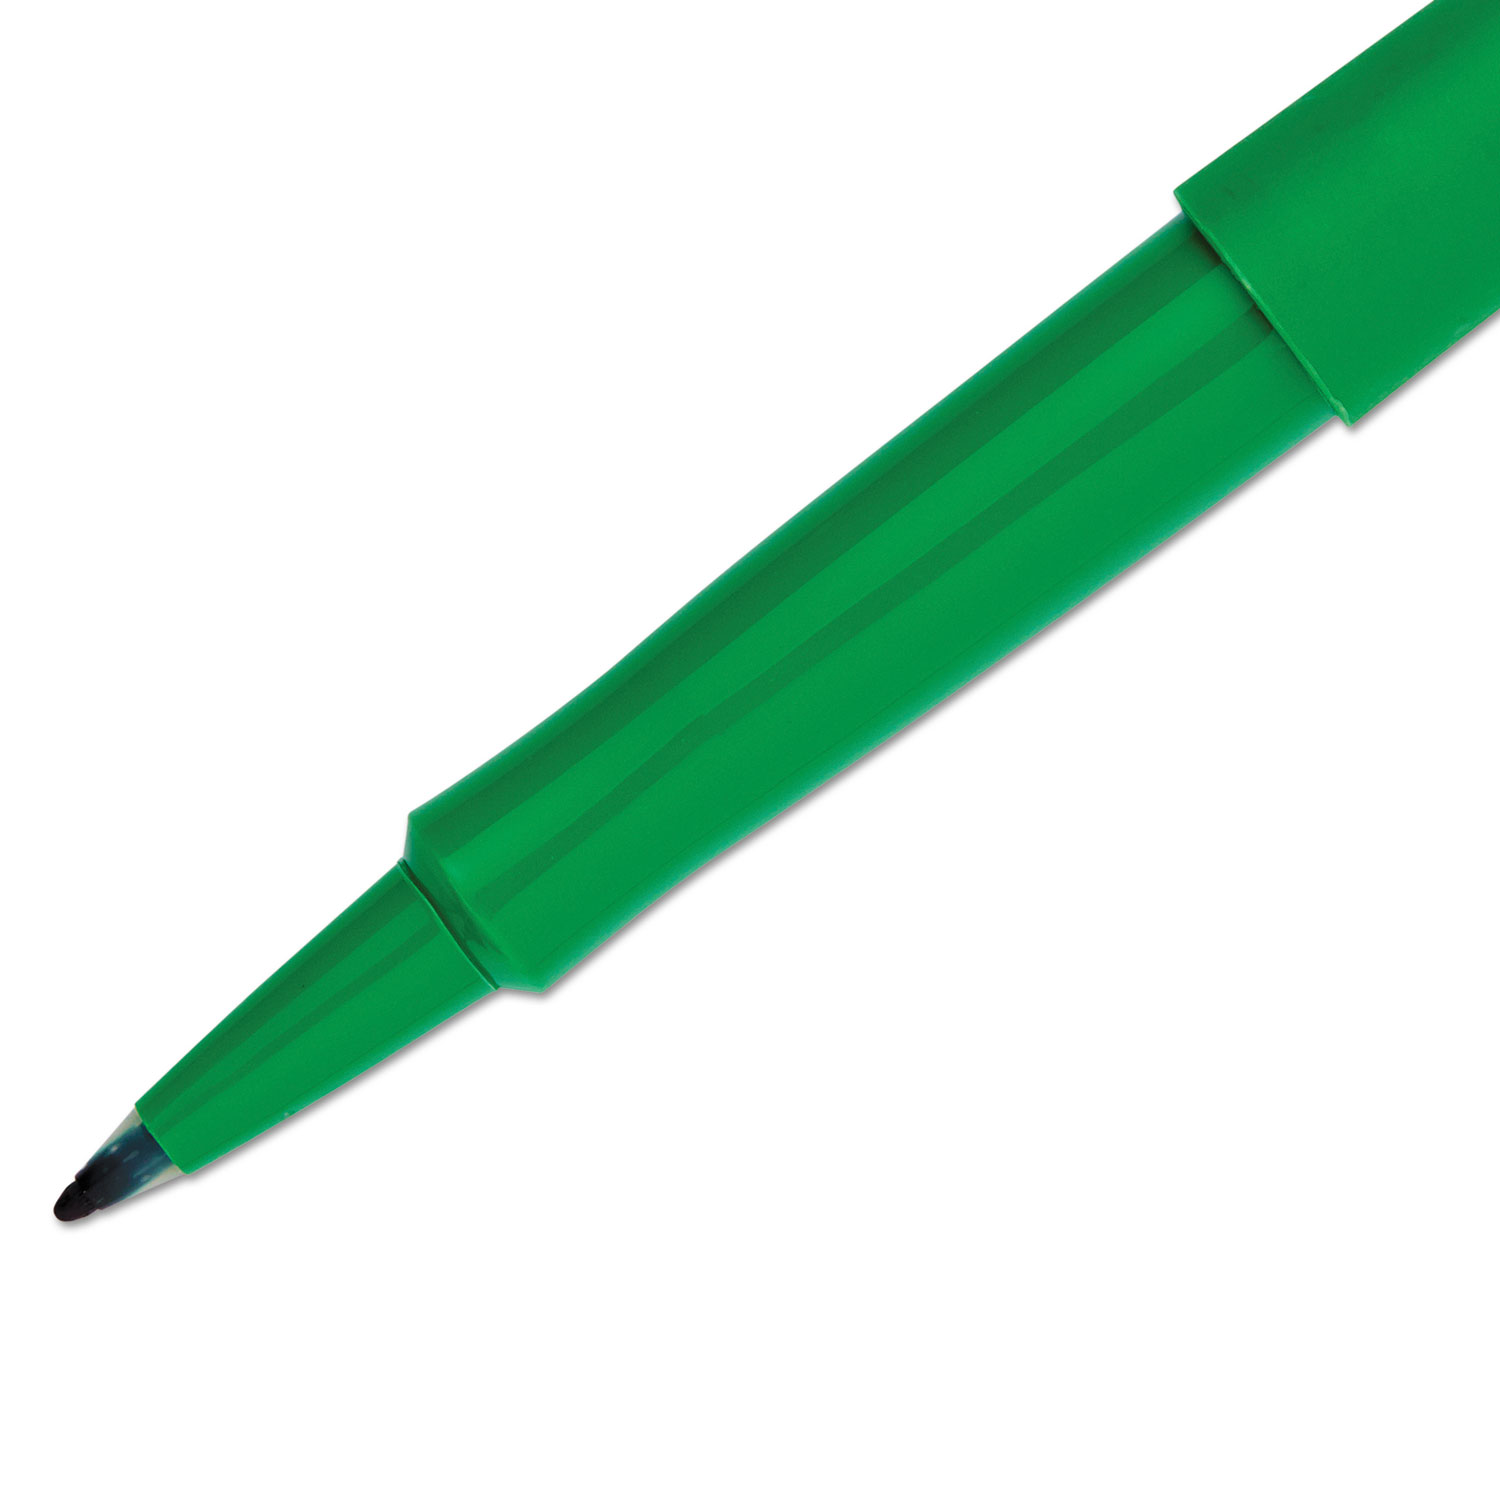 Paper Mate Flair Point Guard Felt Tip Marker Pens - Black Barrel